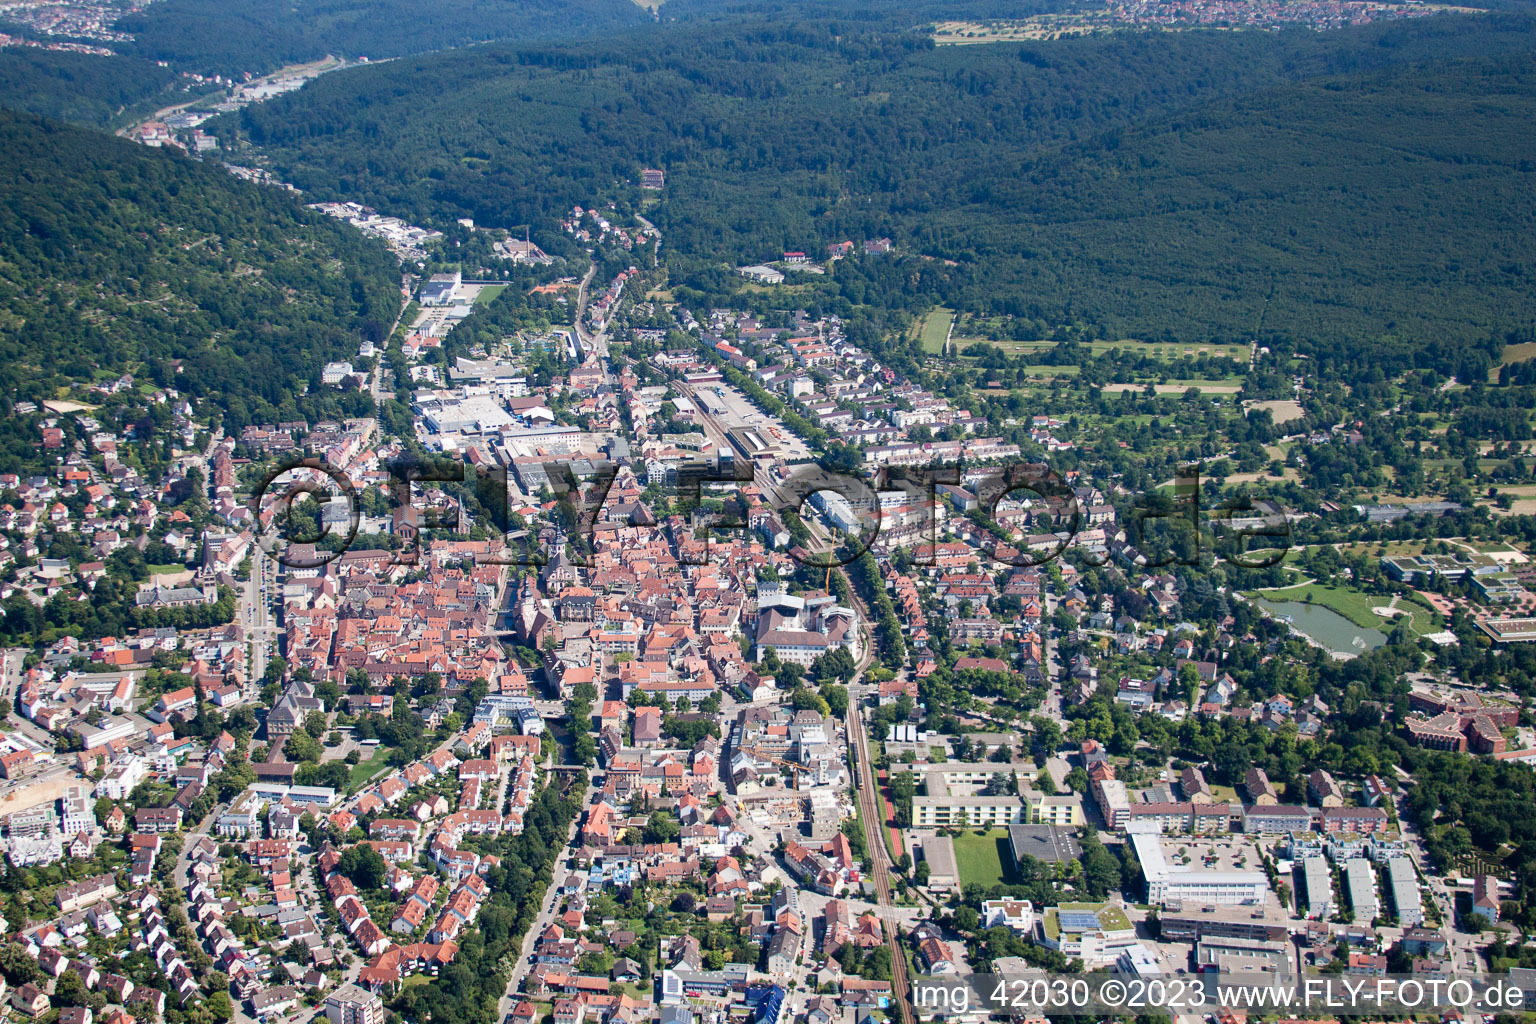 Aerial view of Ettlingen in the state Baden-Wuerttemberg, Germany